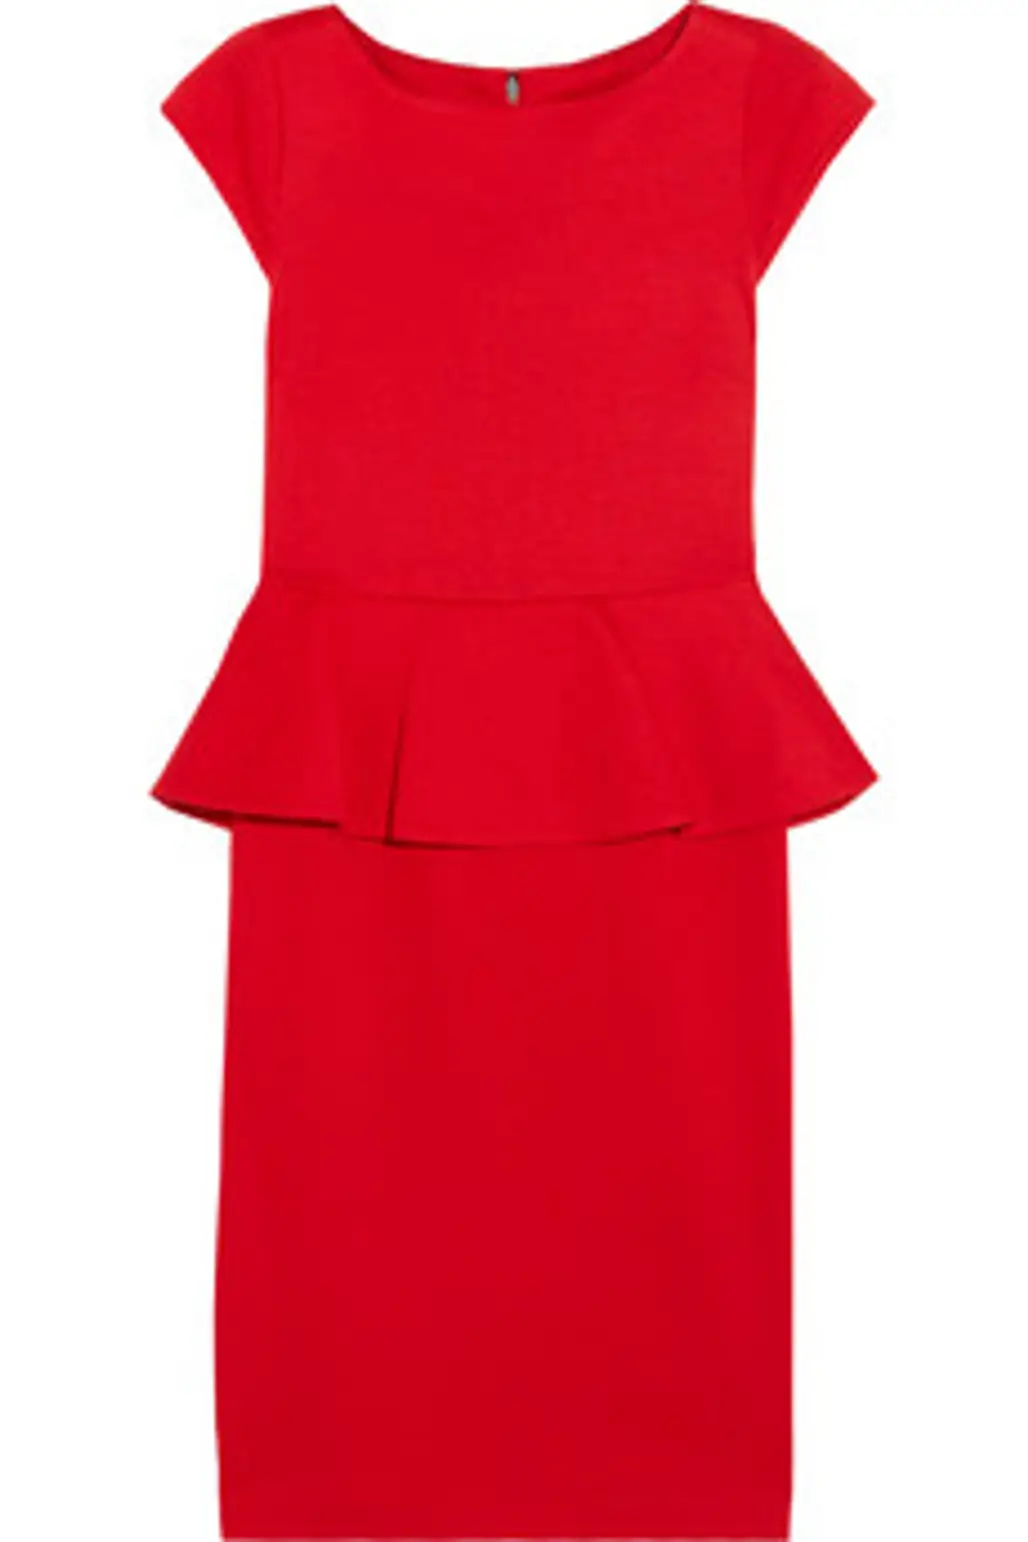 Red Peplum Dress